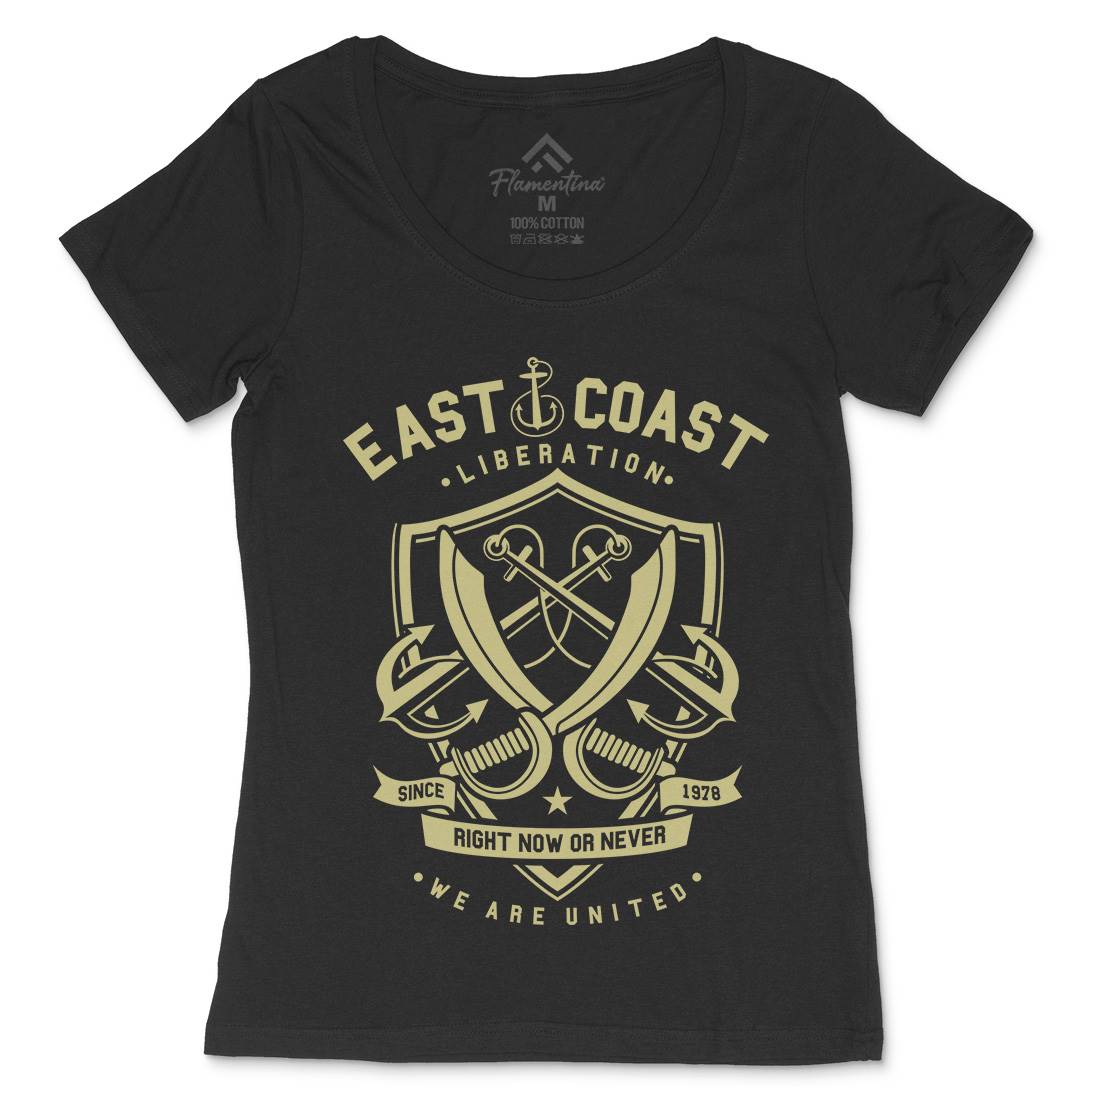 East Coast Anchor Womens Scoop Neck T-Shirt Navy A226